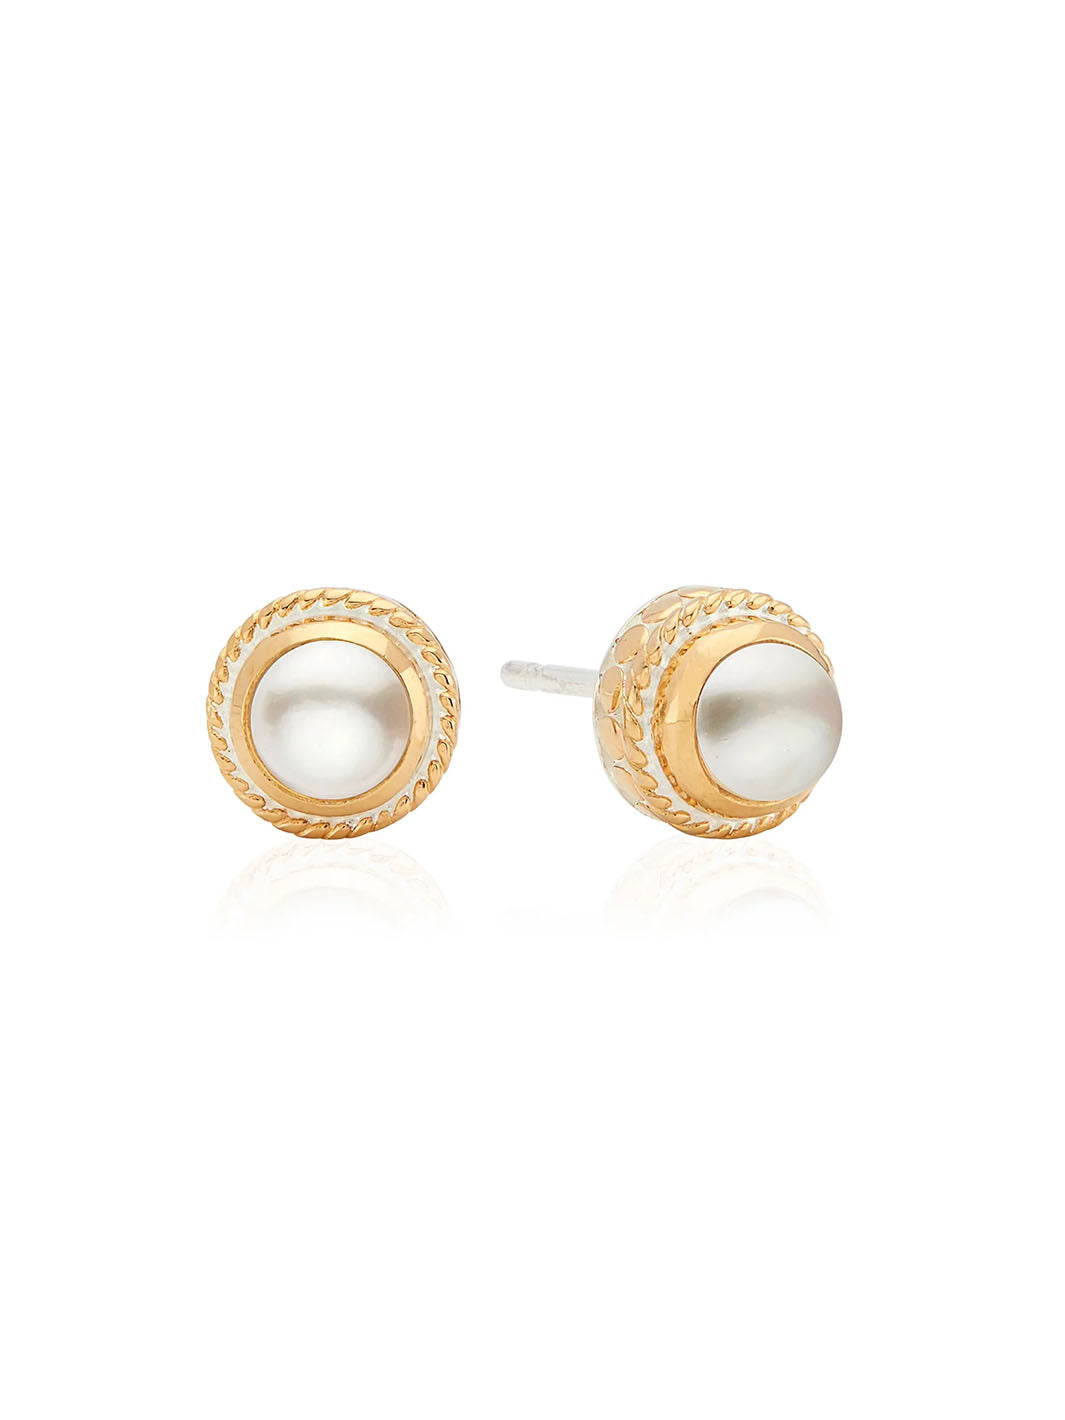 Pearl Stud Earrings in Gold/Sterling Silver